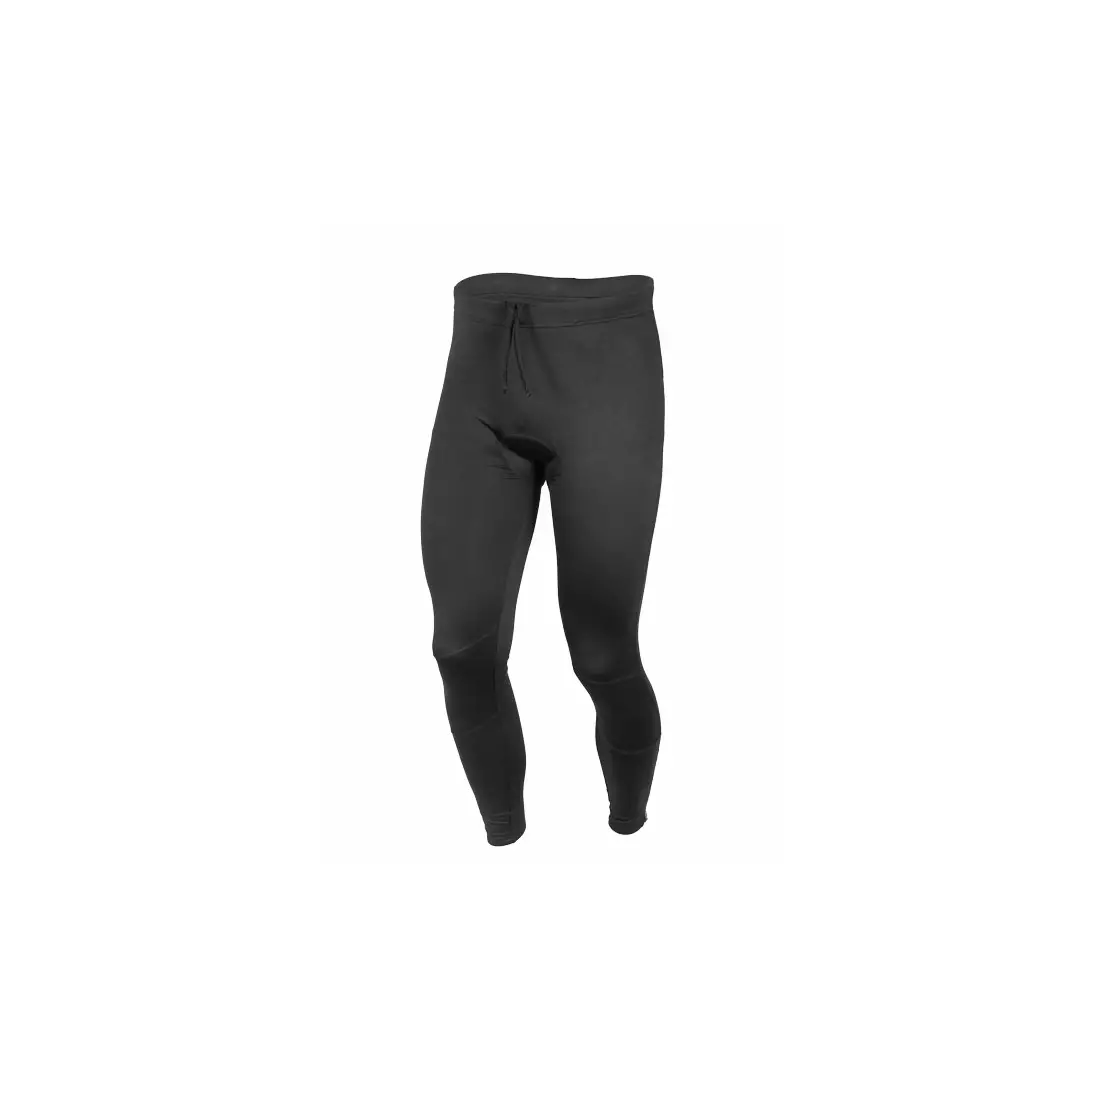 CRIVIT - uninsulated cycling pants, coolmax - black